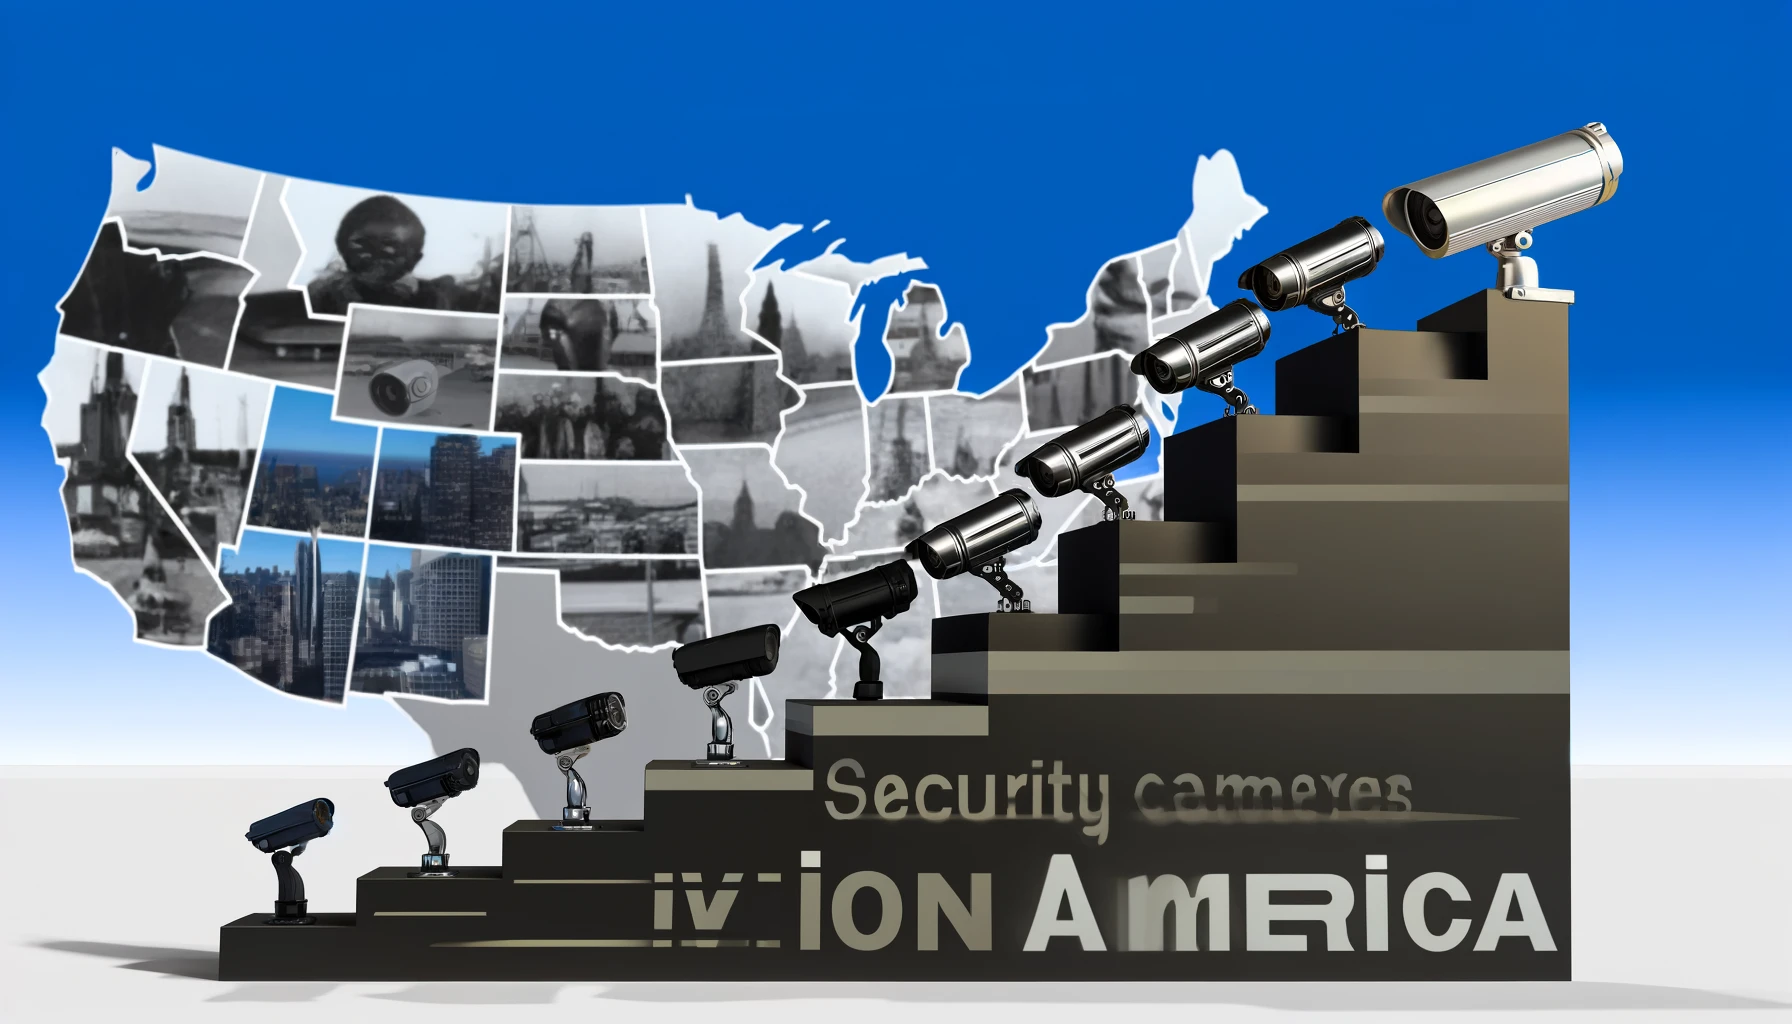 Security Cameras Innovation in America